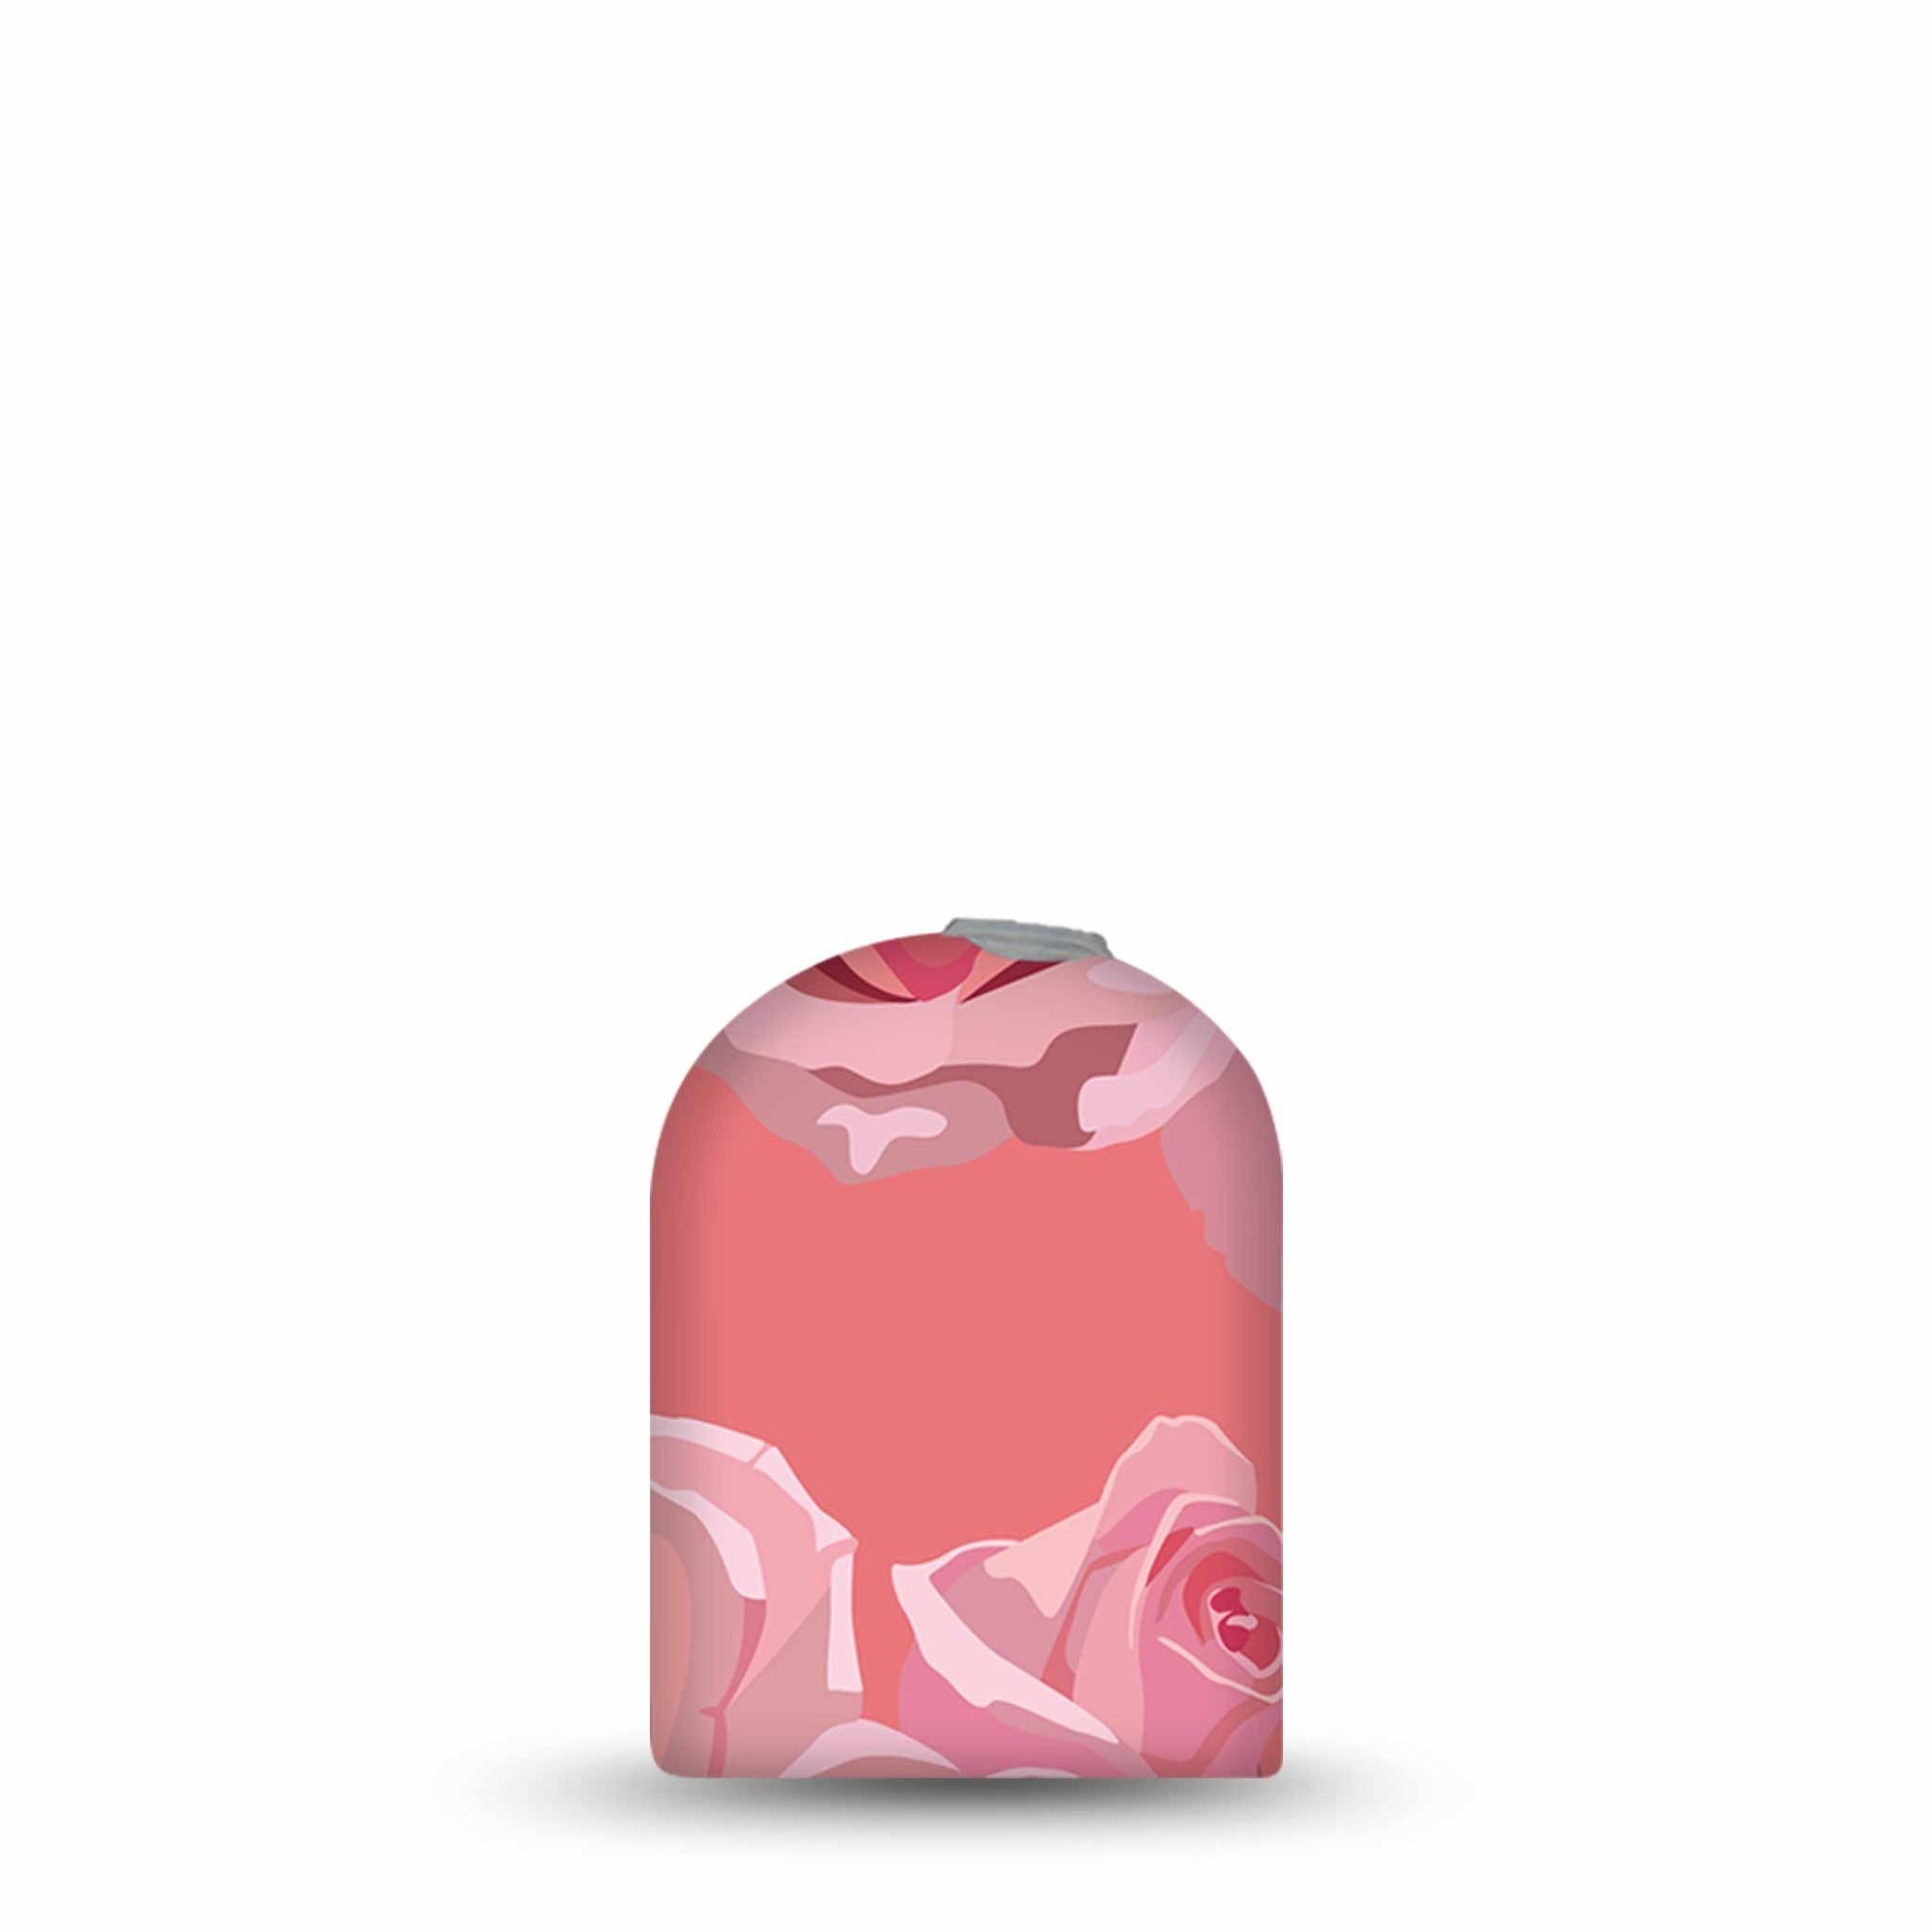 ExpressionMed Blush Rose Pod Full Wrap Sticker Pod Full Wrap Sticker Single Sticker Pink Roses Decorative Decal Pump design